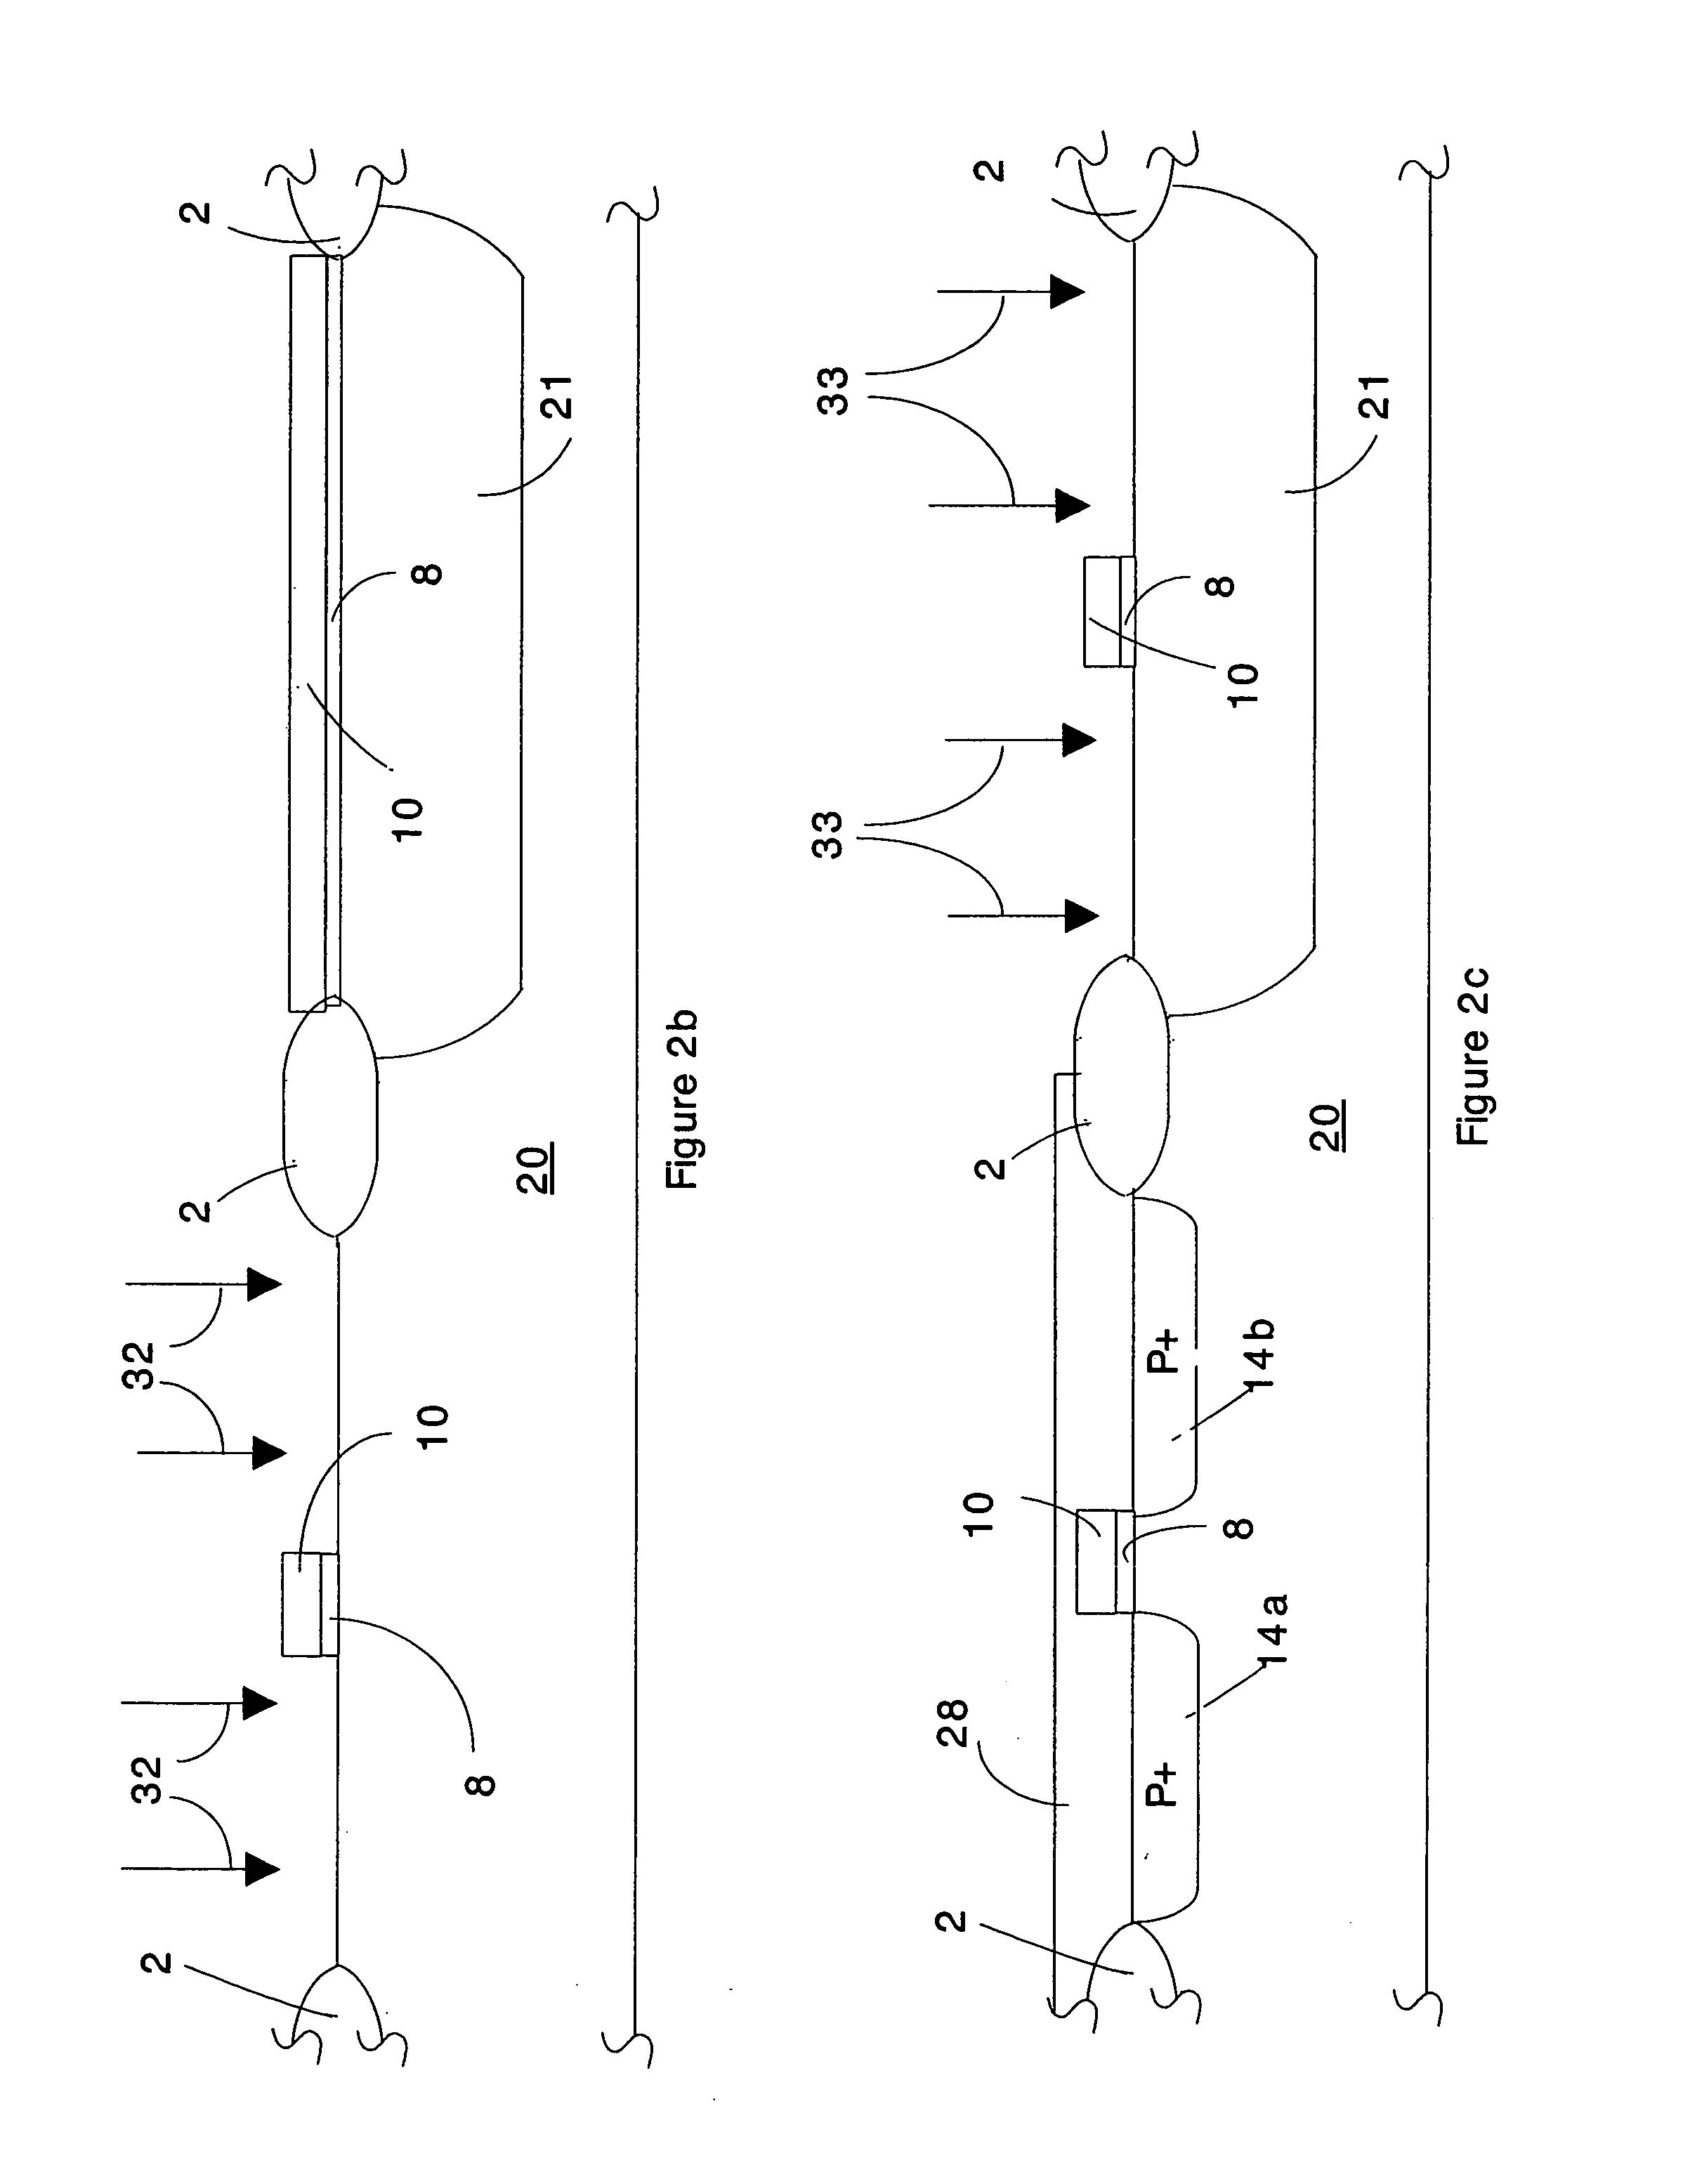 Symmetric non-intrusive and covert technique to render a transistor permanently non-operable